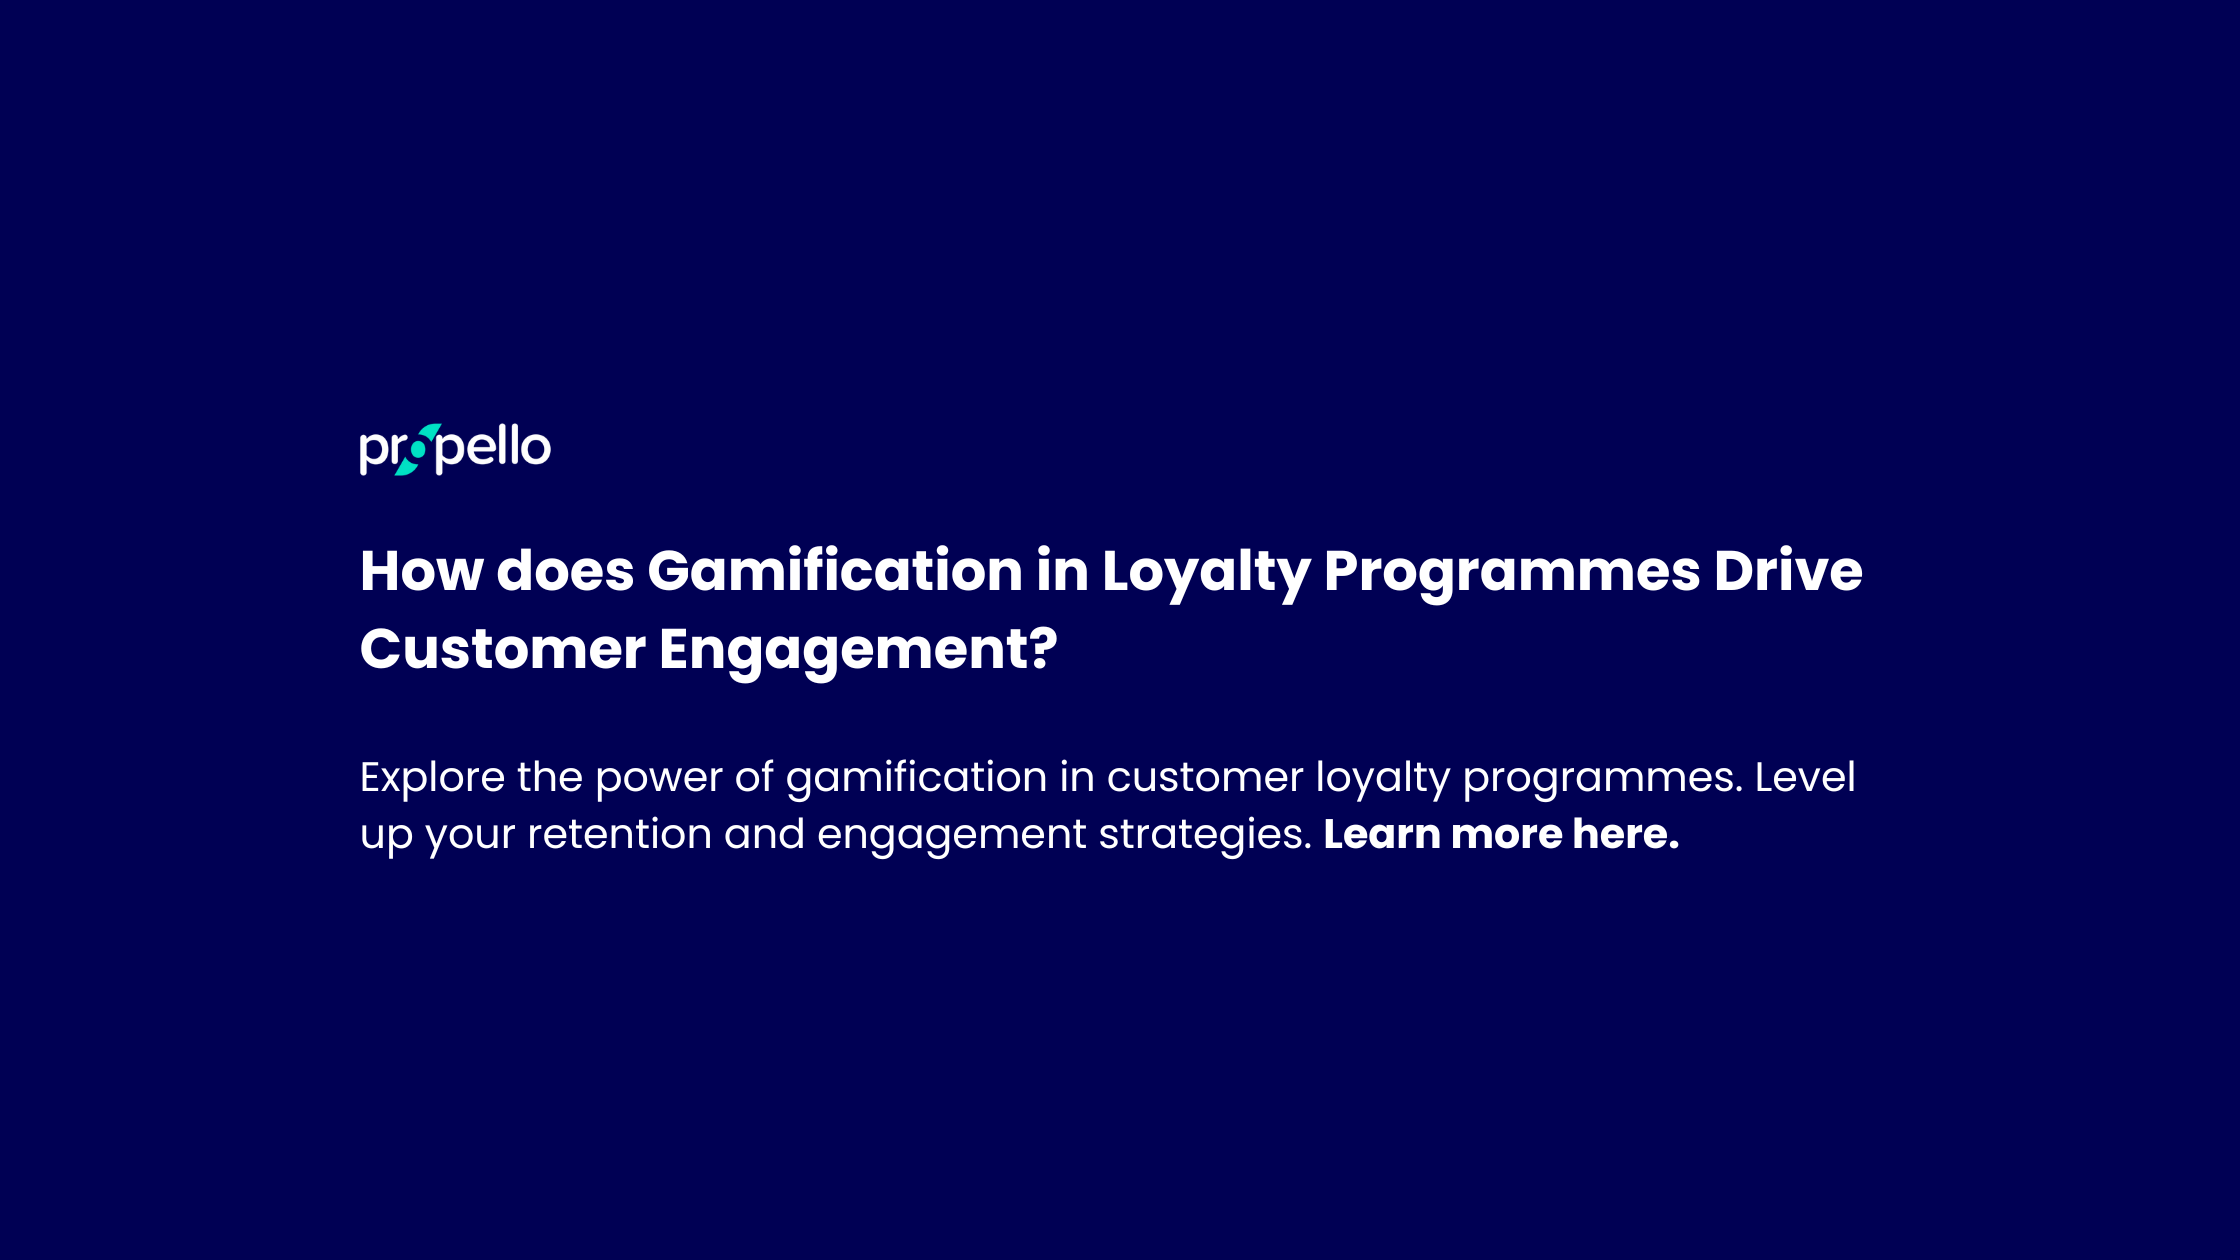 Gamification loyalty programs